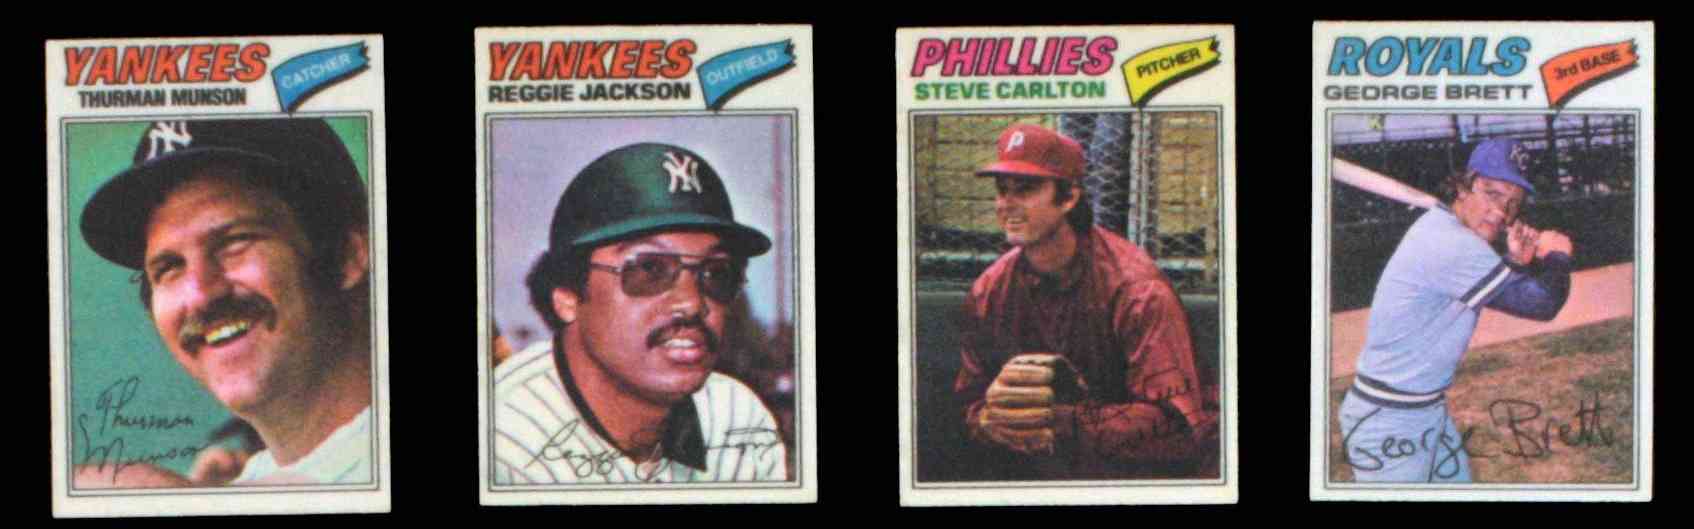 1977 Topps Cloth Stickers #22 Reggie Jackson [* VAR:] (Yankees) Baseball cards value